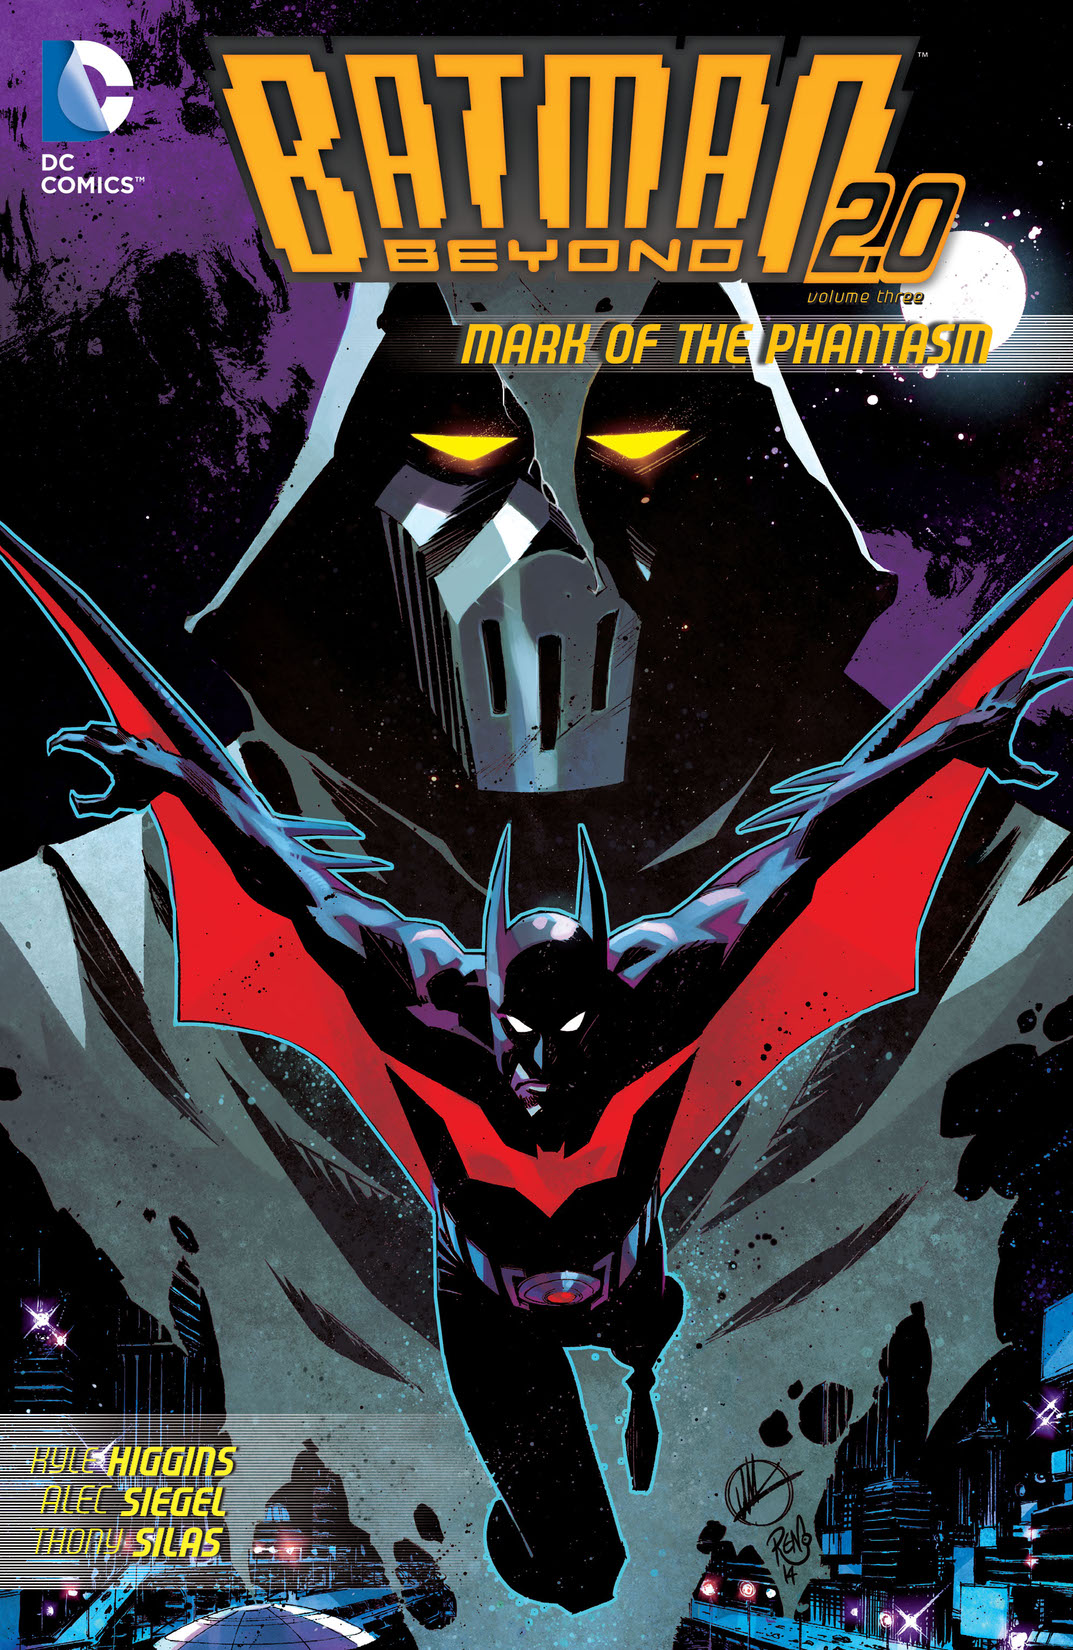 Batman Beyond 2.0 Vol. 3: Mark of the Phantasm preview images